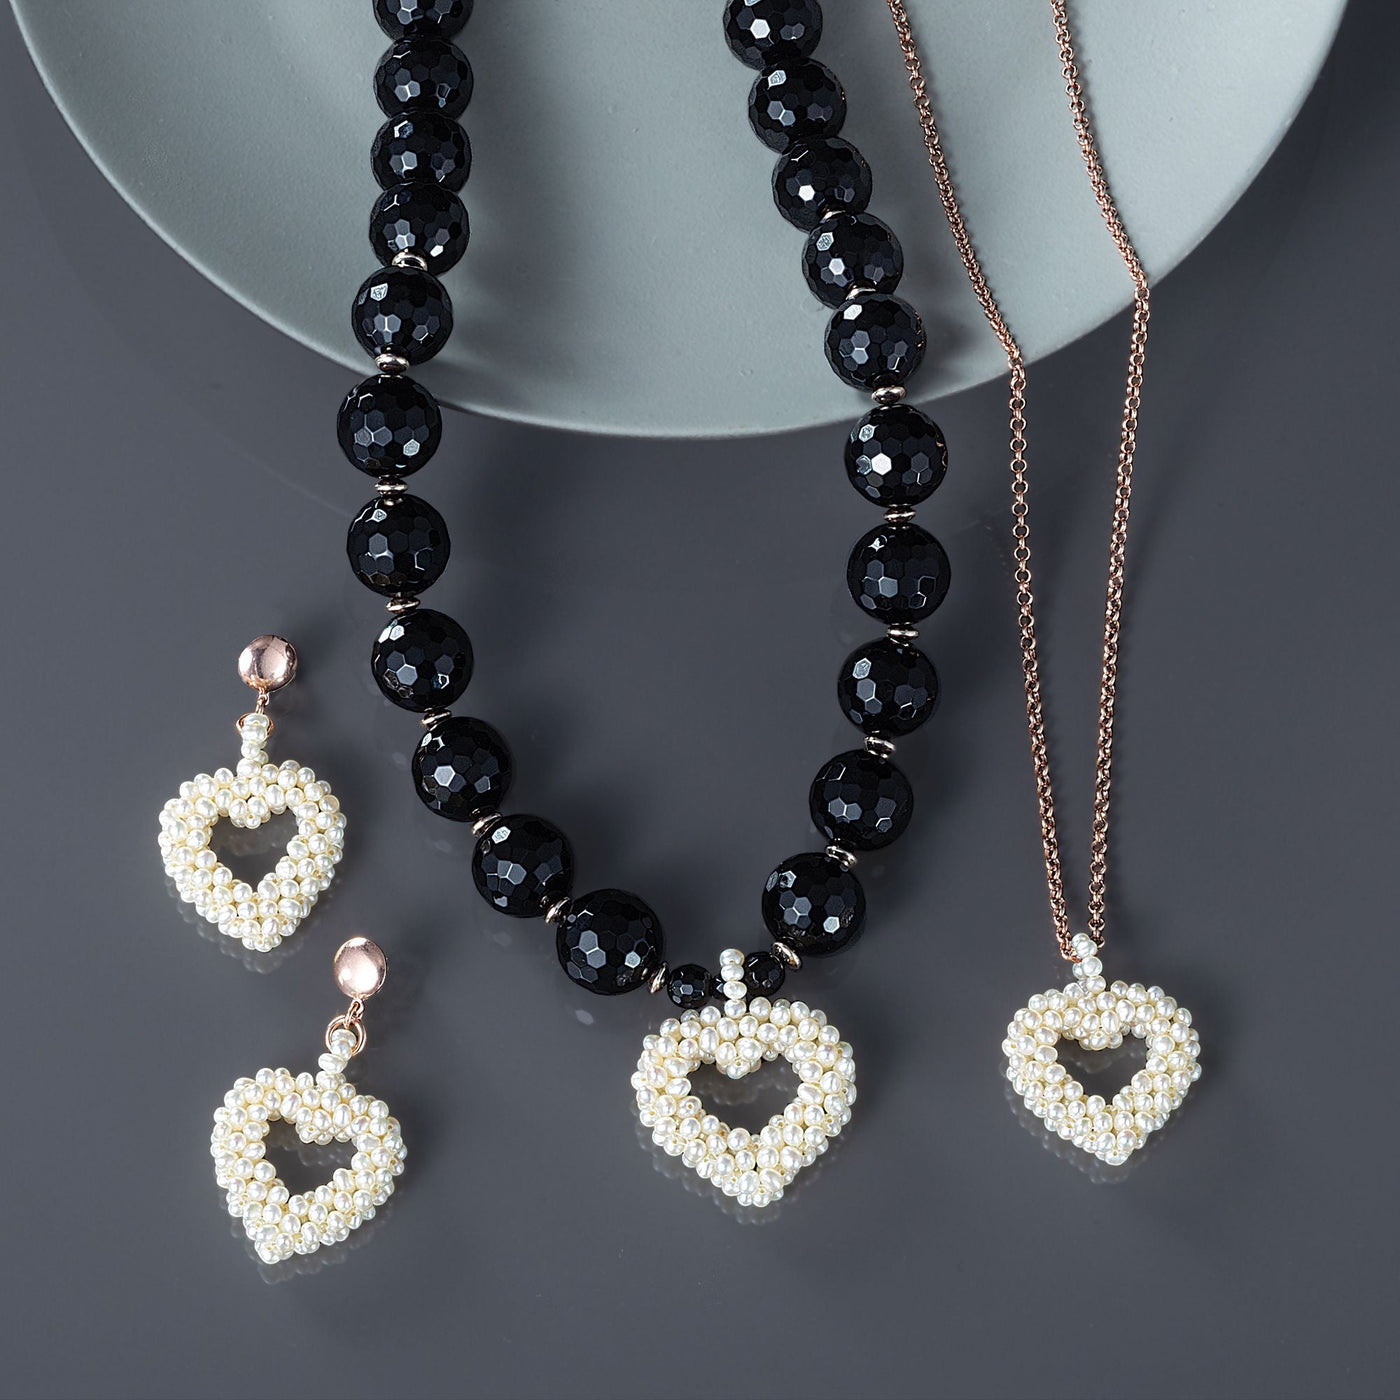 Murano Glass Pearl Heart Earrings